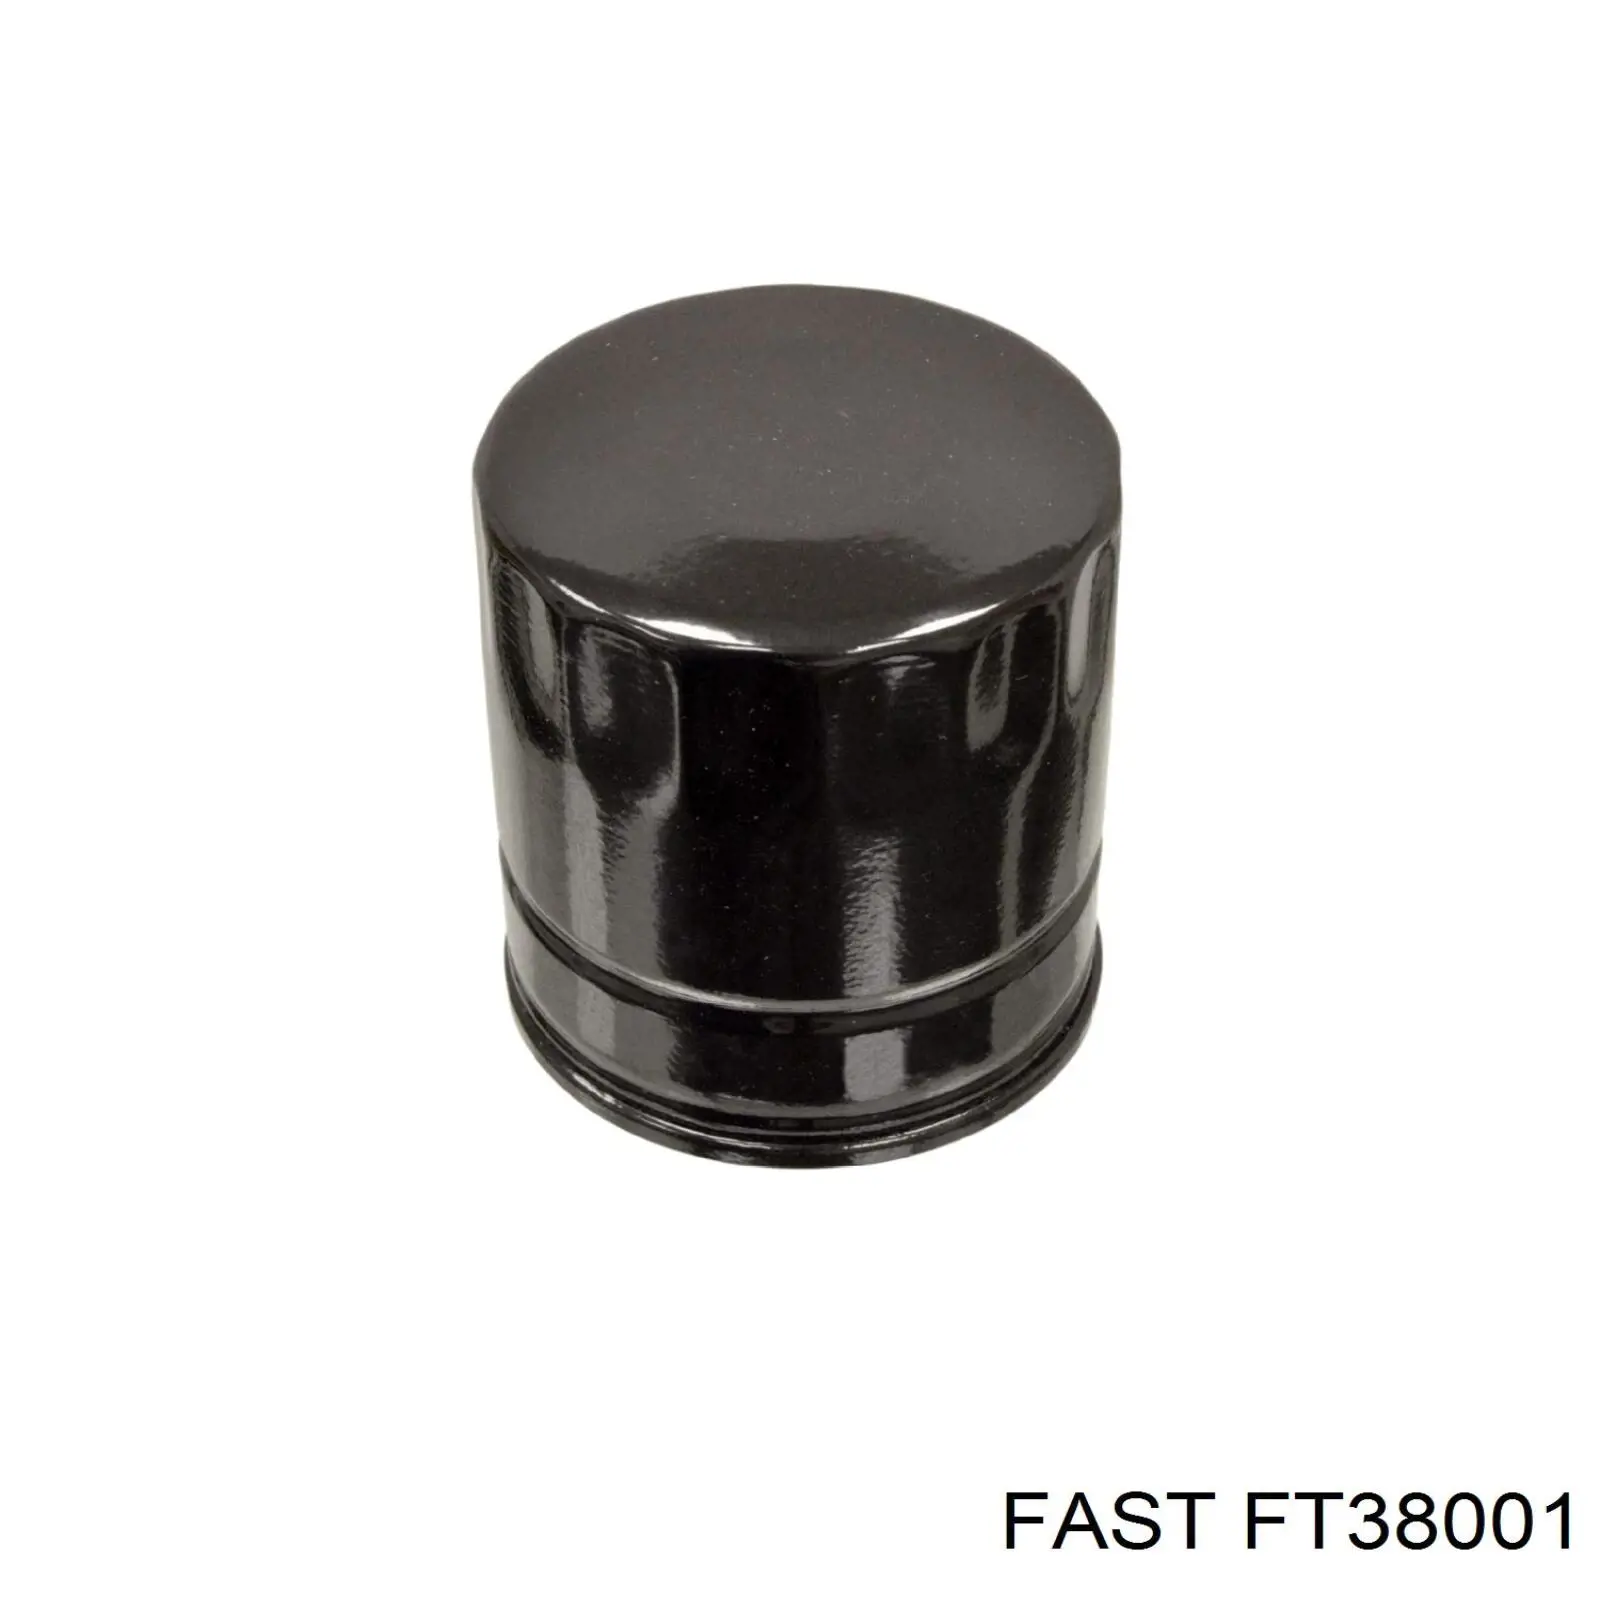 FT38001 Fast filtro de aceite